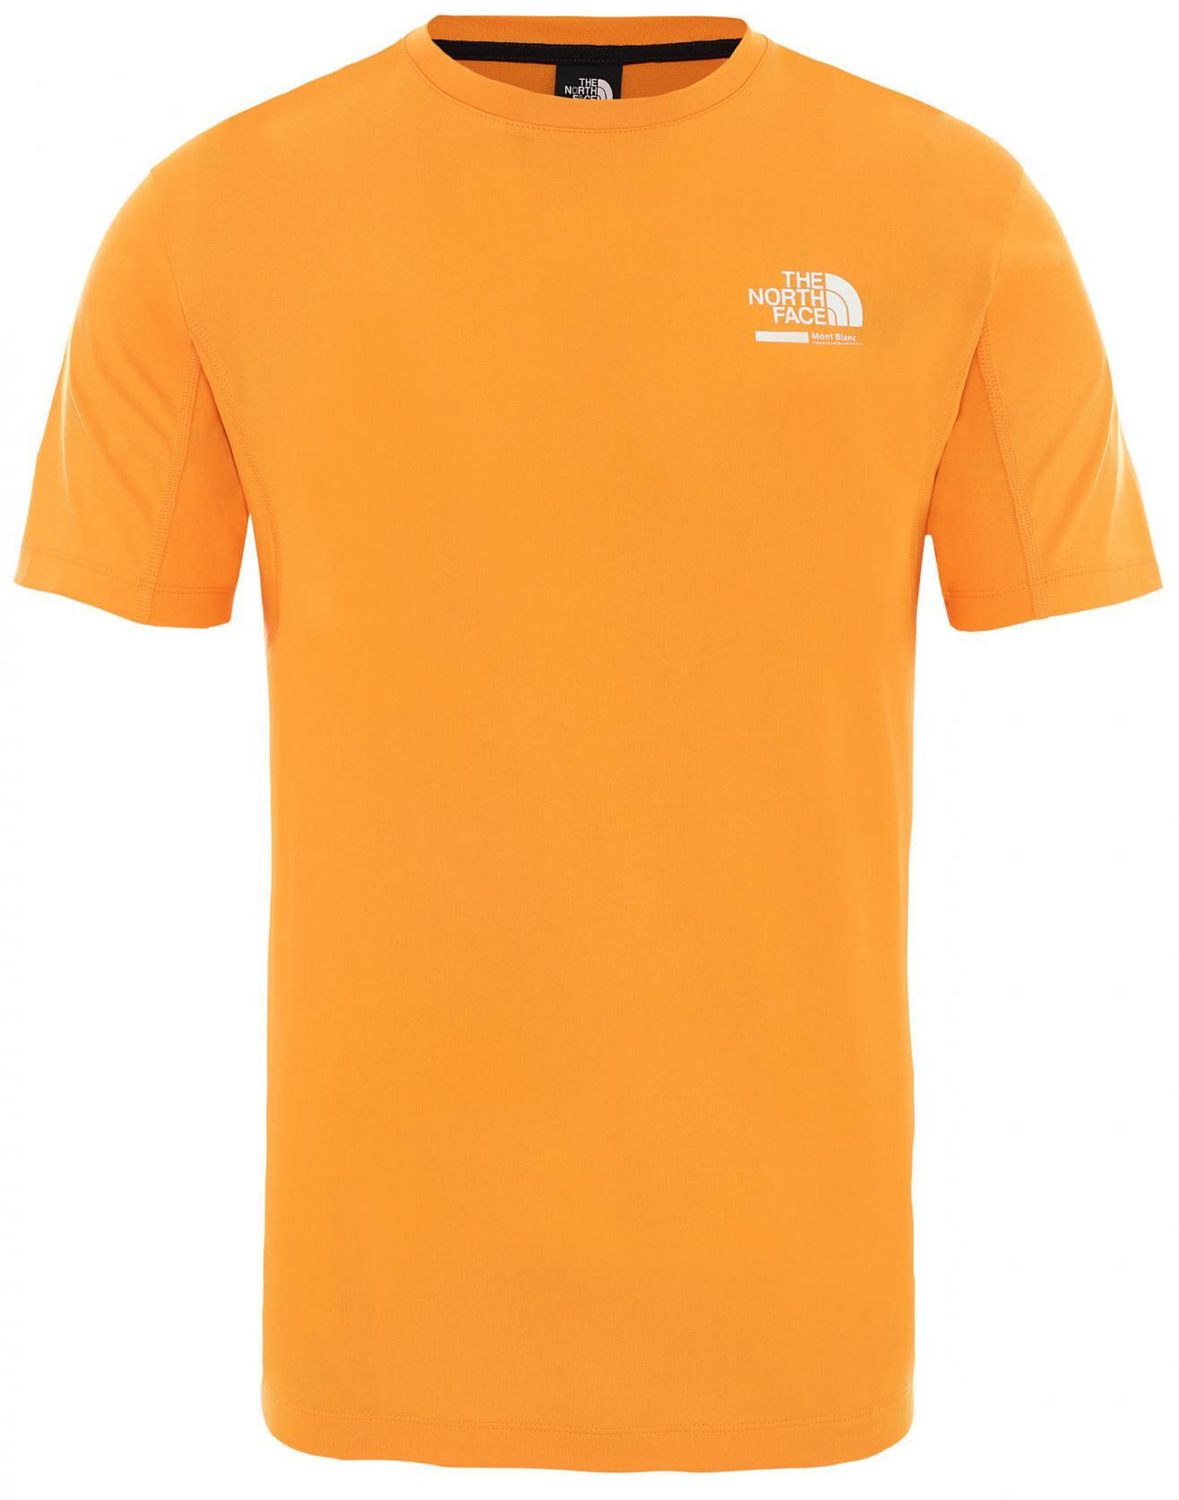 Футболка для активного отдыха The North Face 2020 Glacier S/S Flame Orange